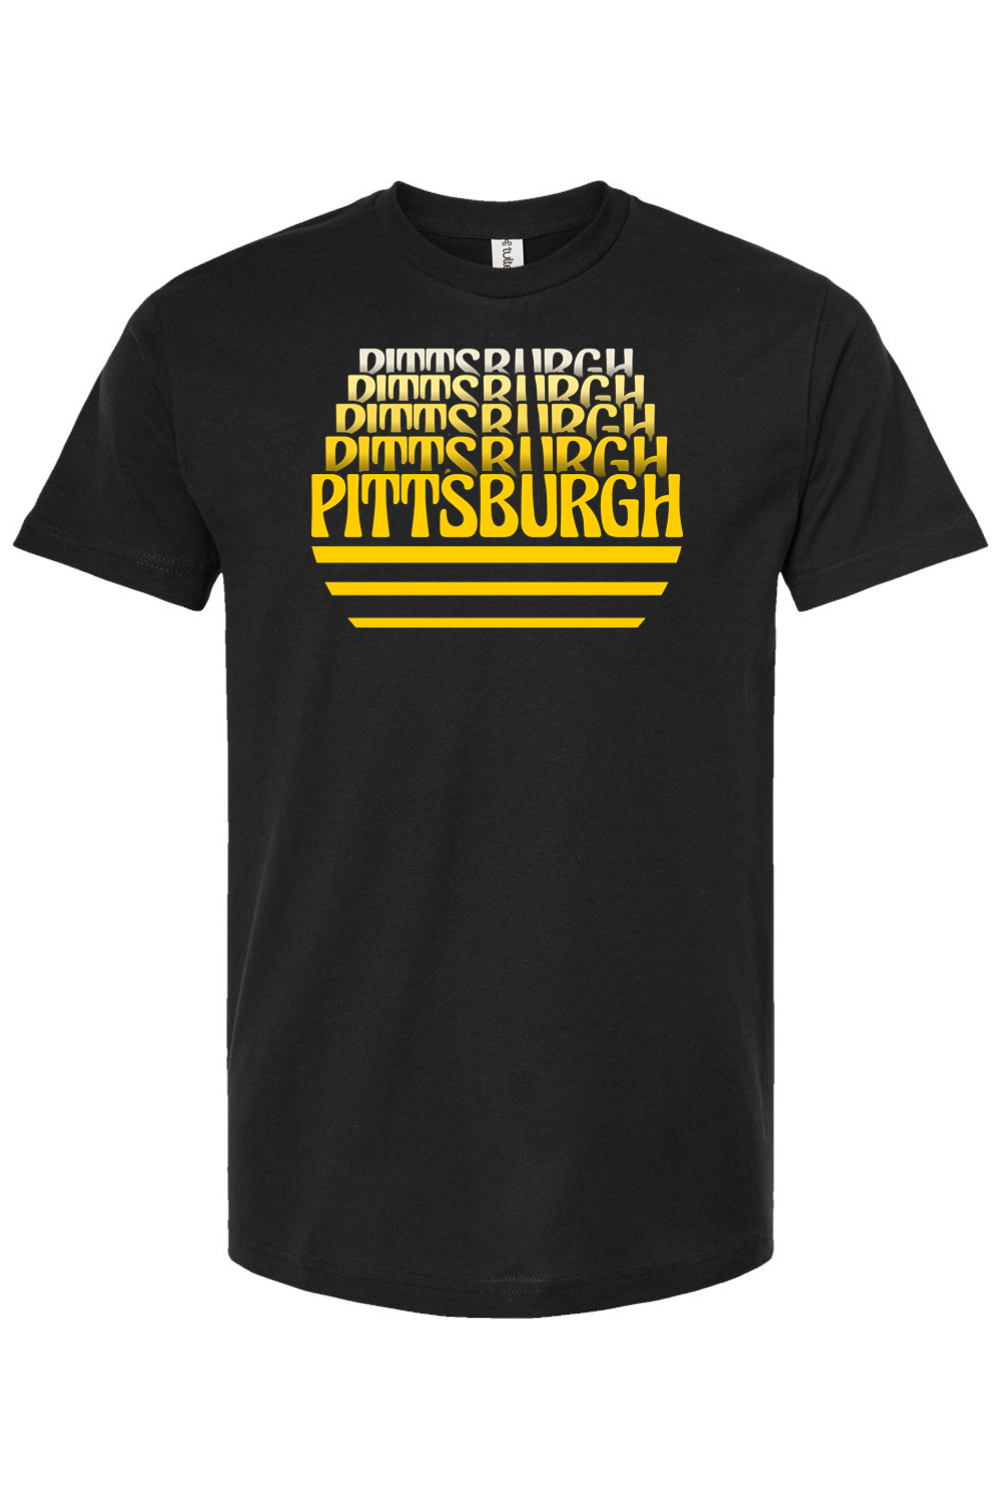 Pittsburgh - Retro - Yinzylvania